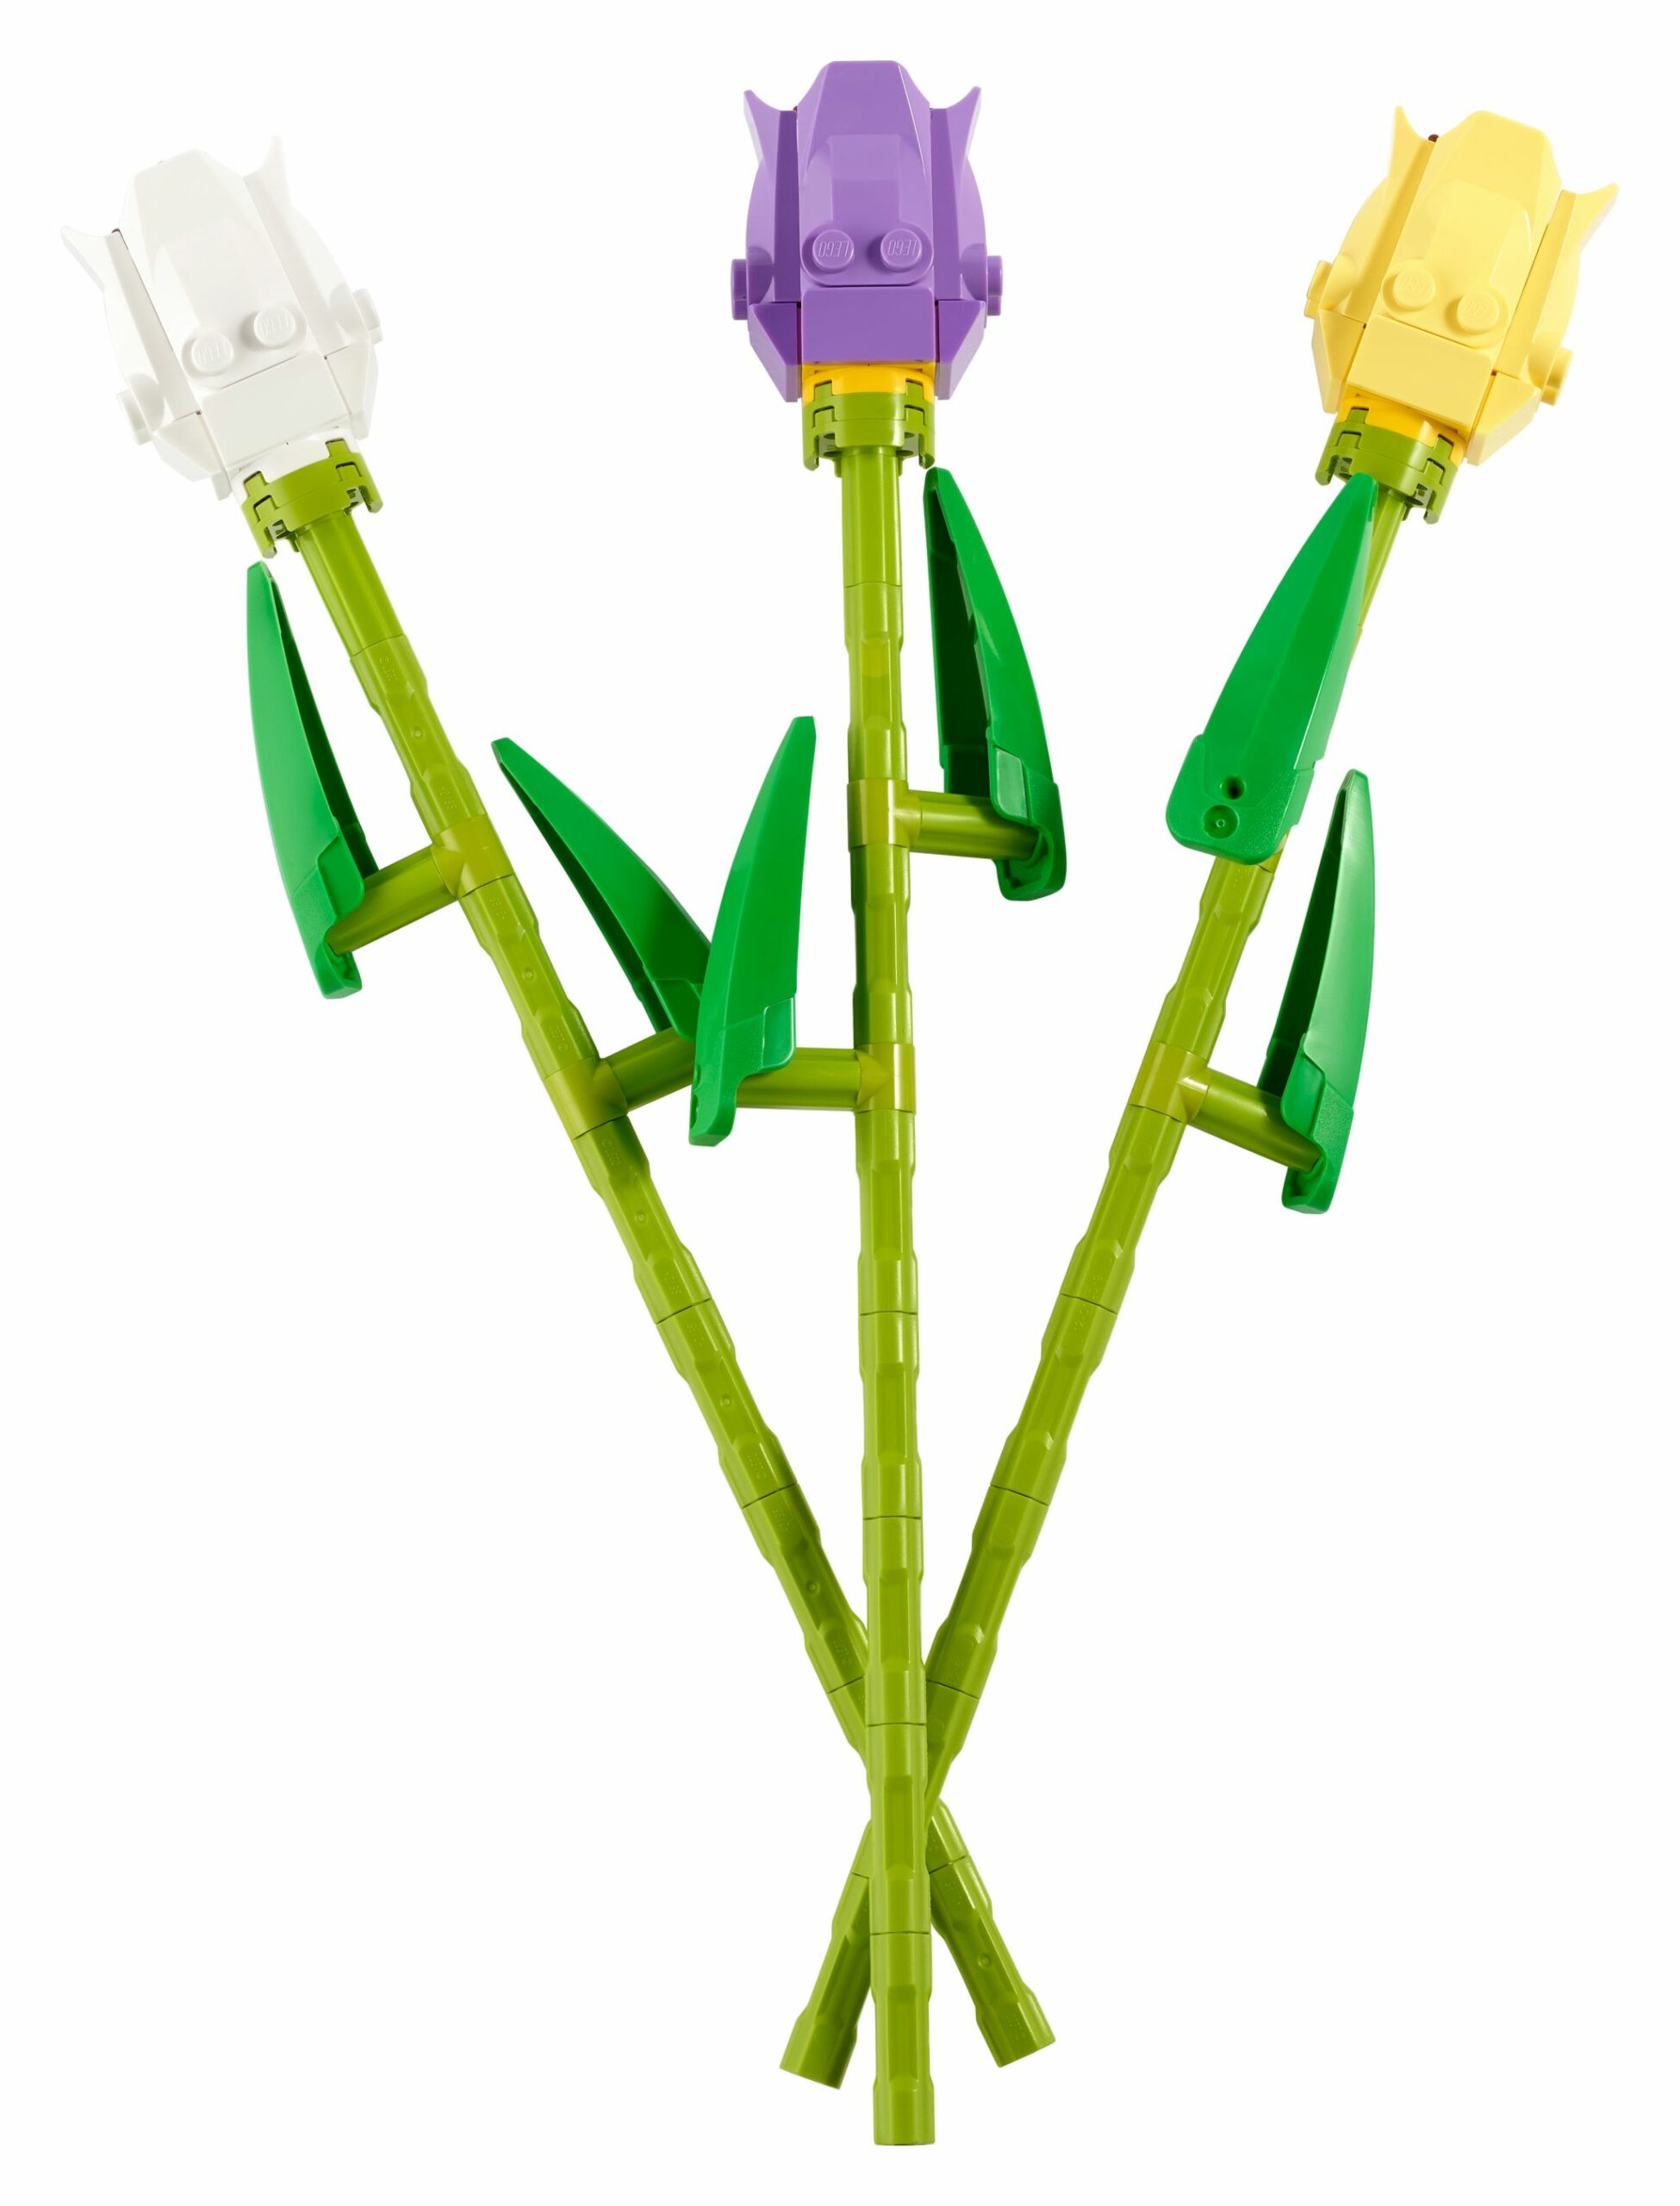 LEGO Creator Tulpen 40461